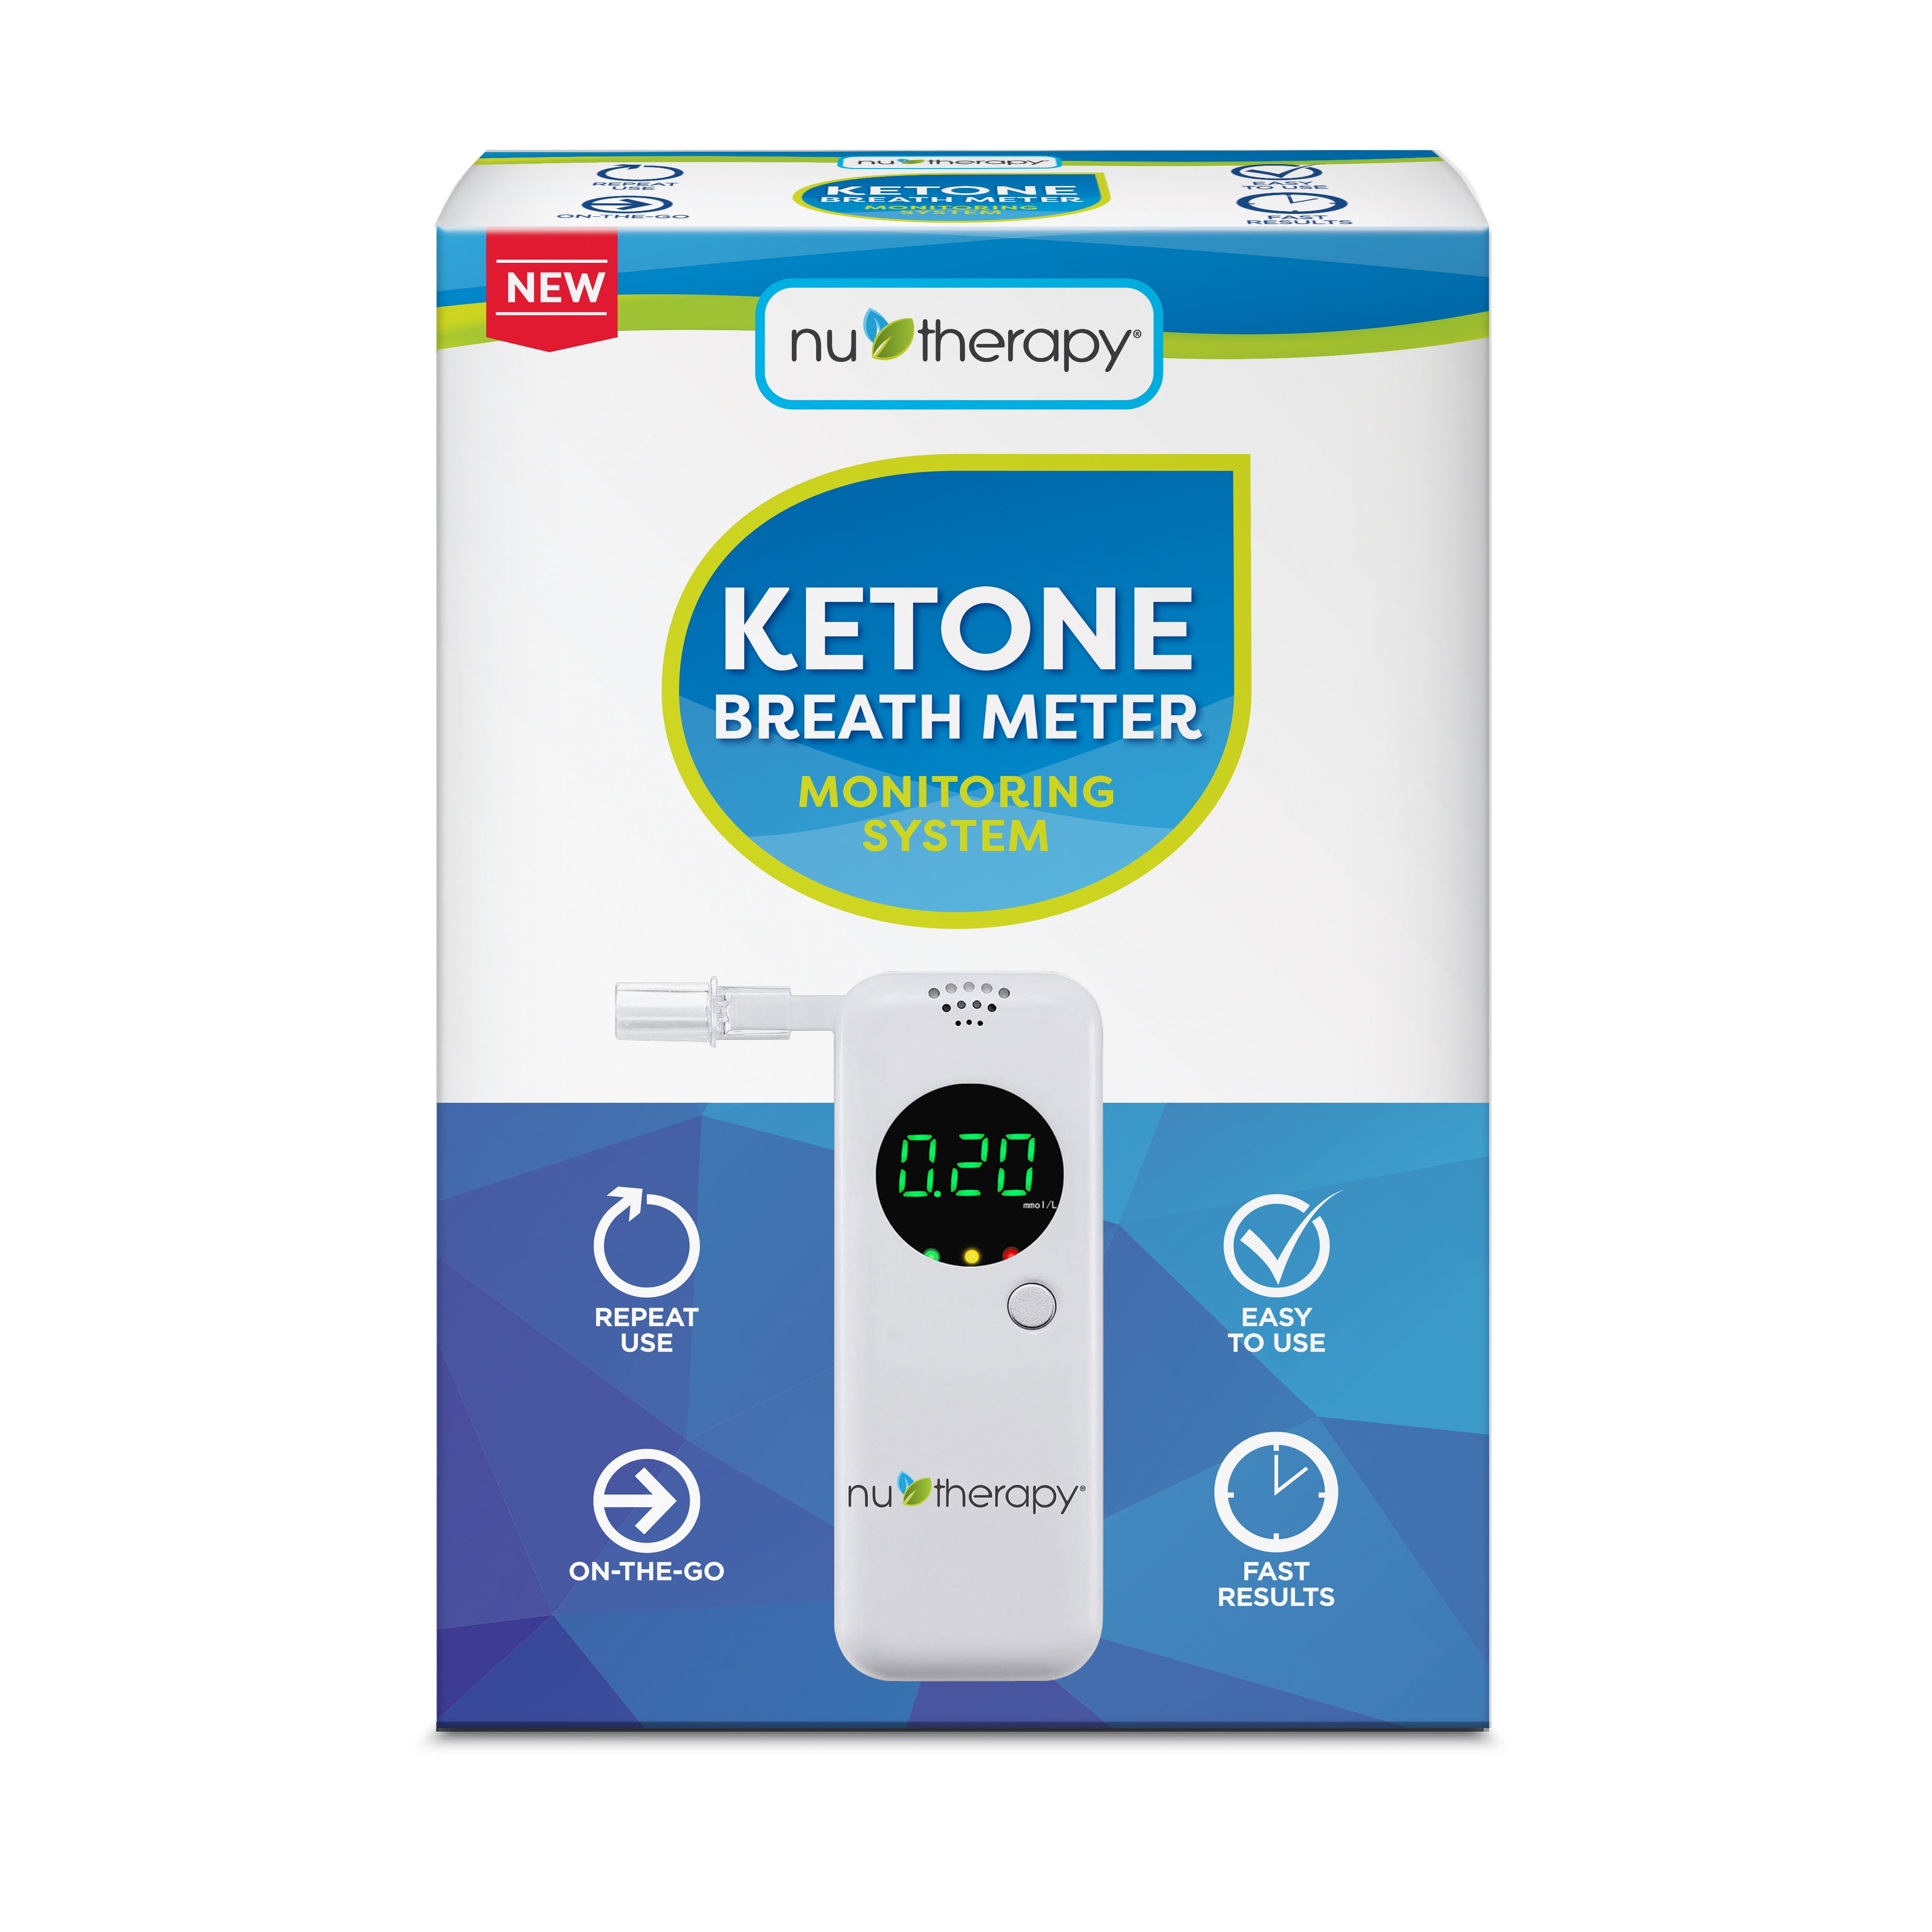 Portable Ketone Meter, Ketone Breath Analyzer Digital Ketone